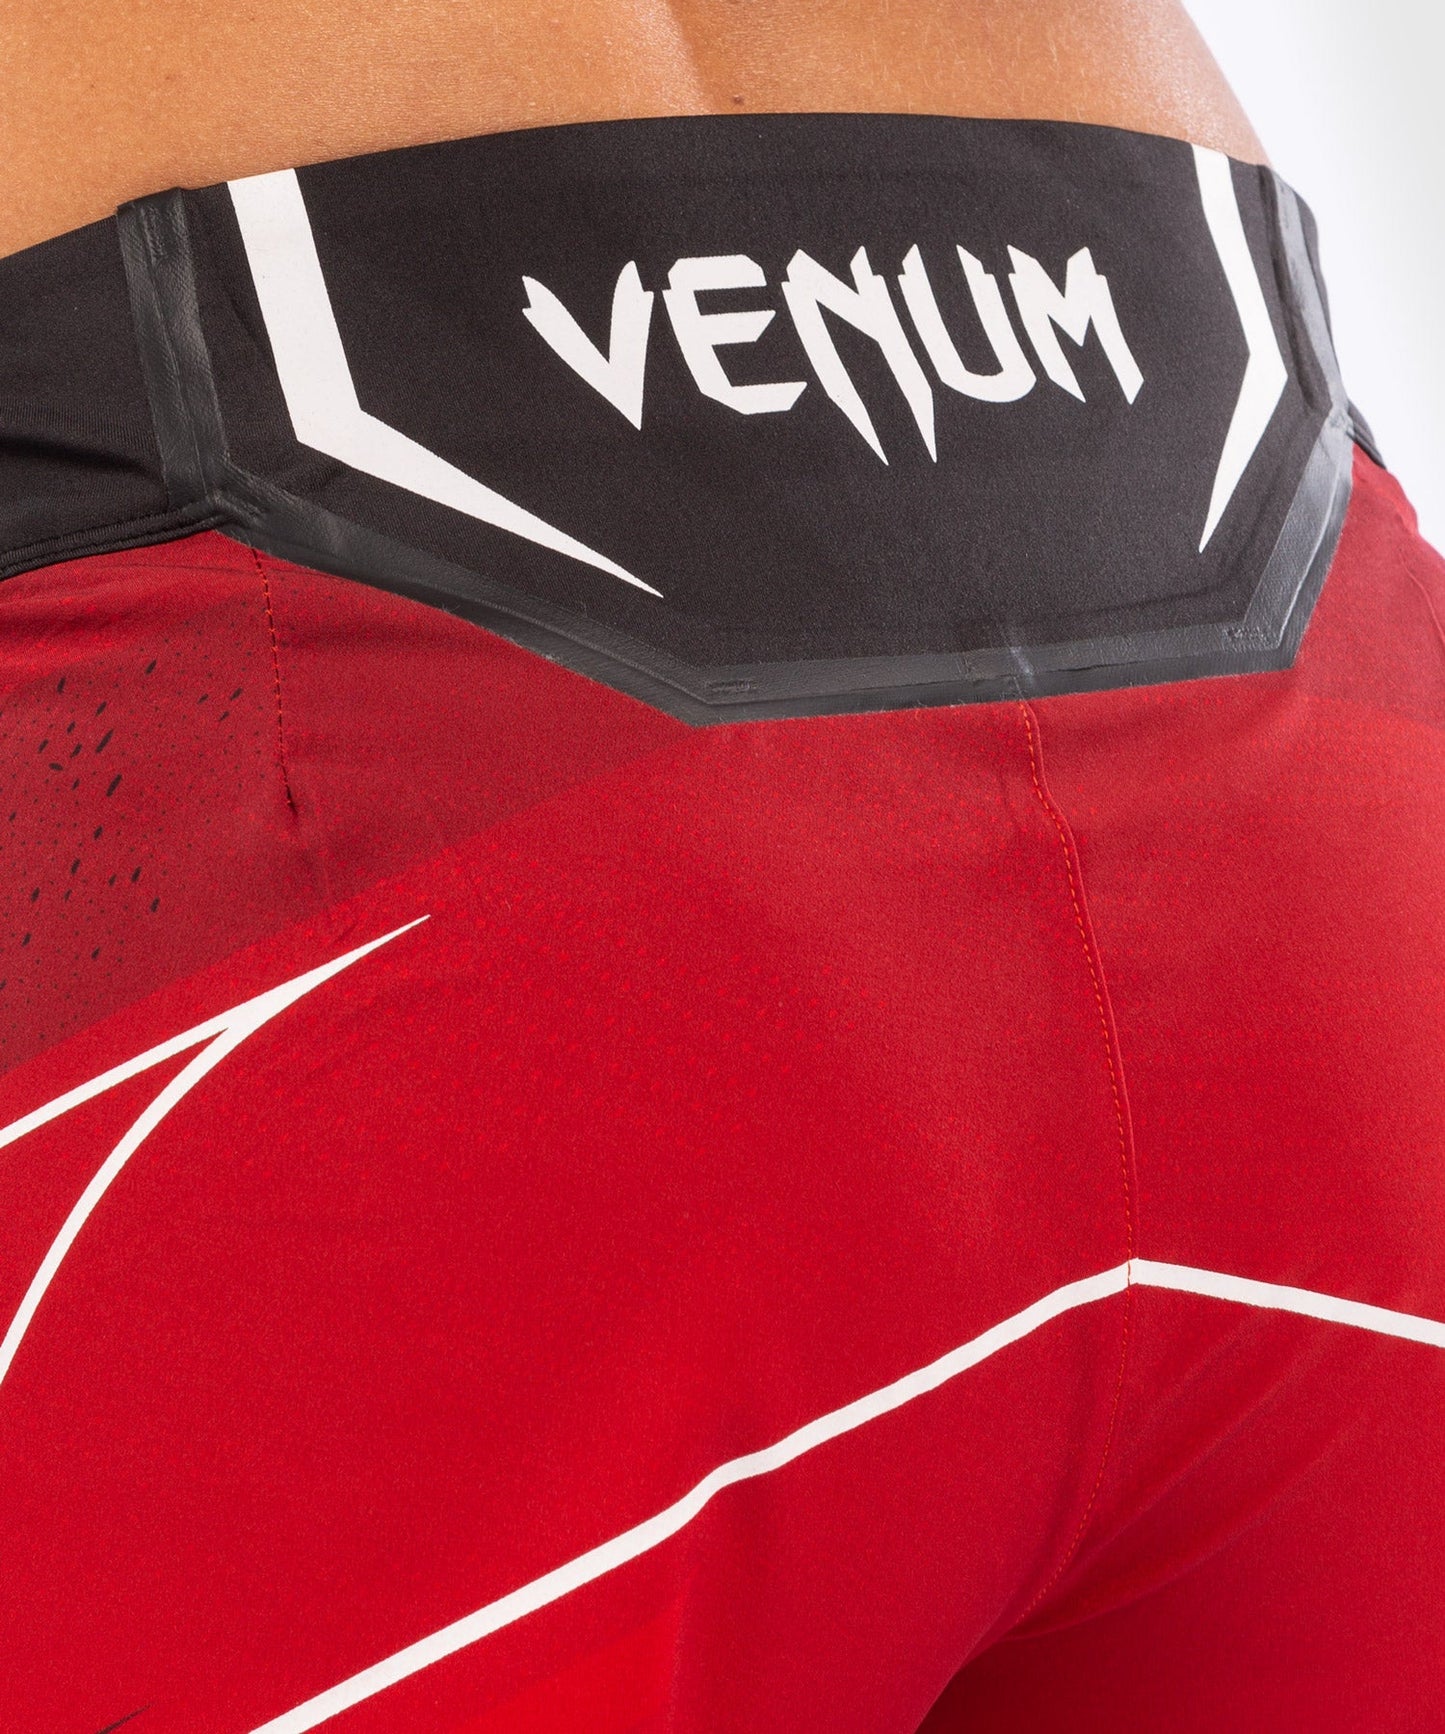 UFC Venum Authentic Fight Night Women's Shorts - Short Fit - Red